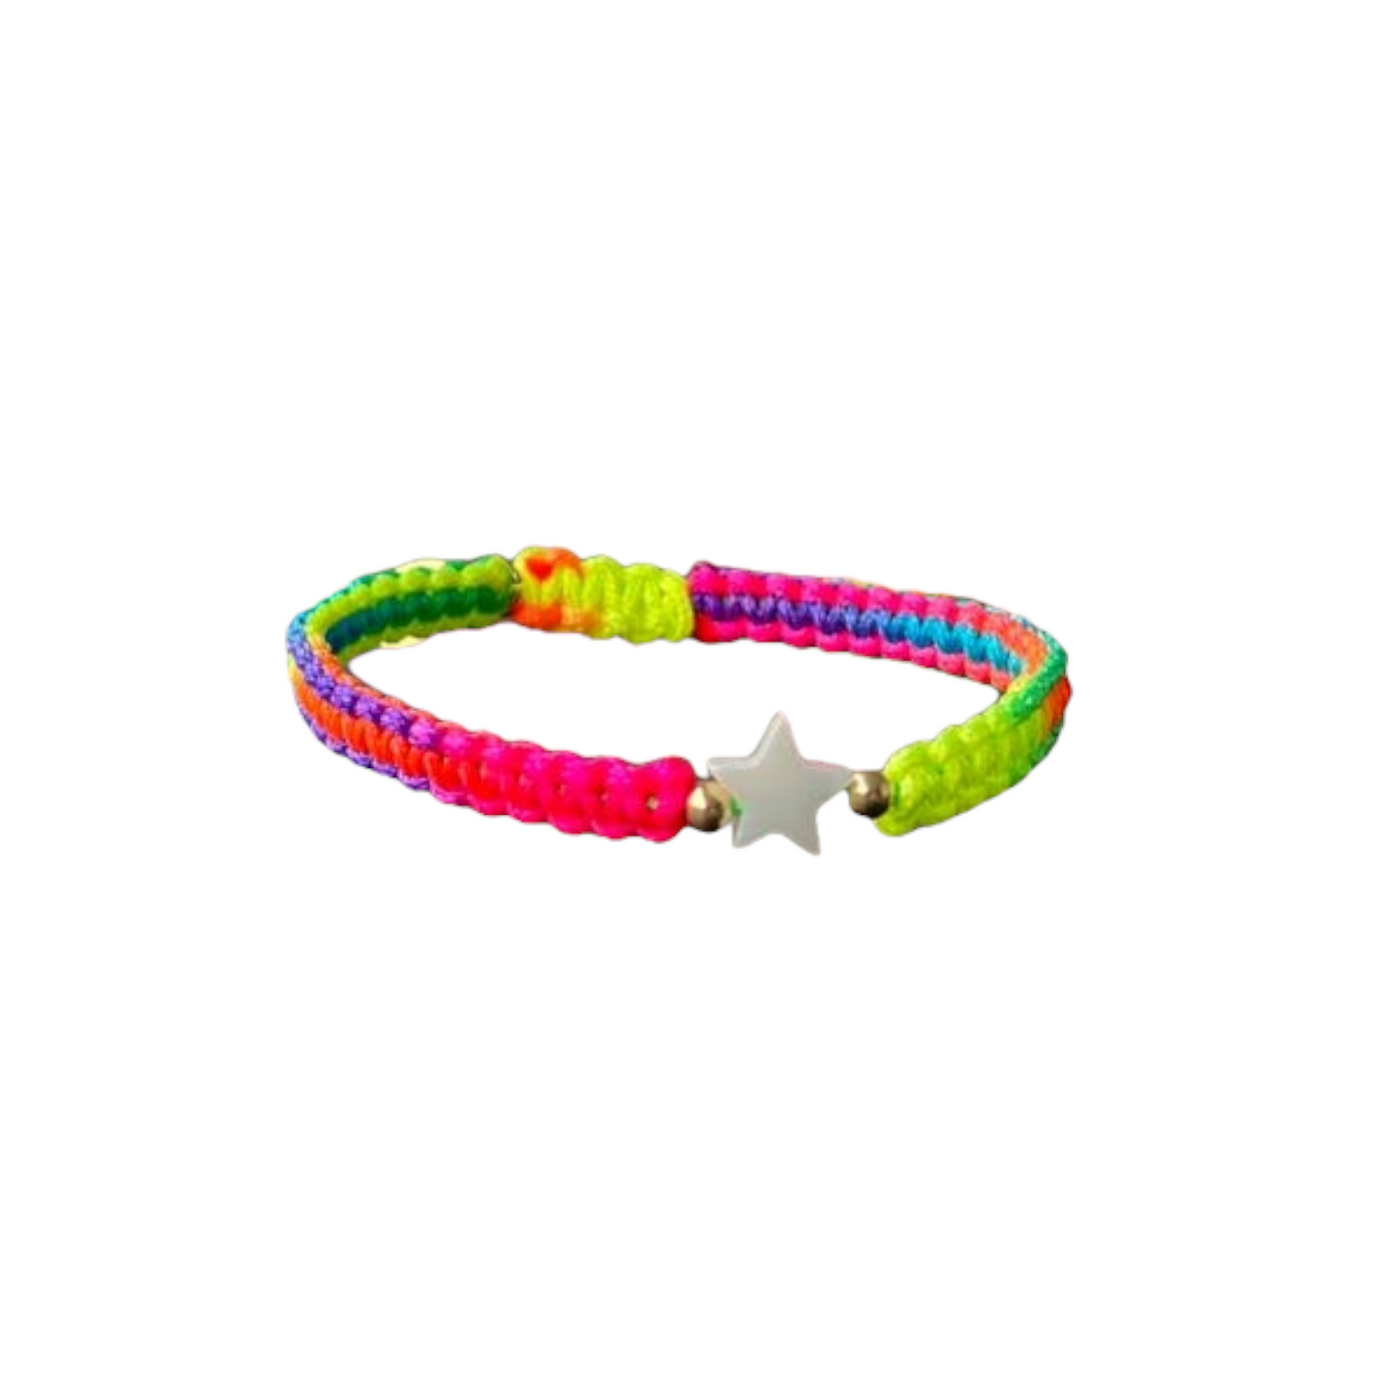 Kids - Mother of Pearl Citron Bracelets - Rainbow